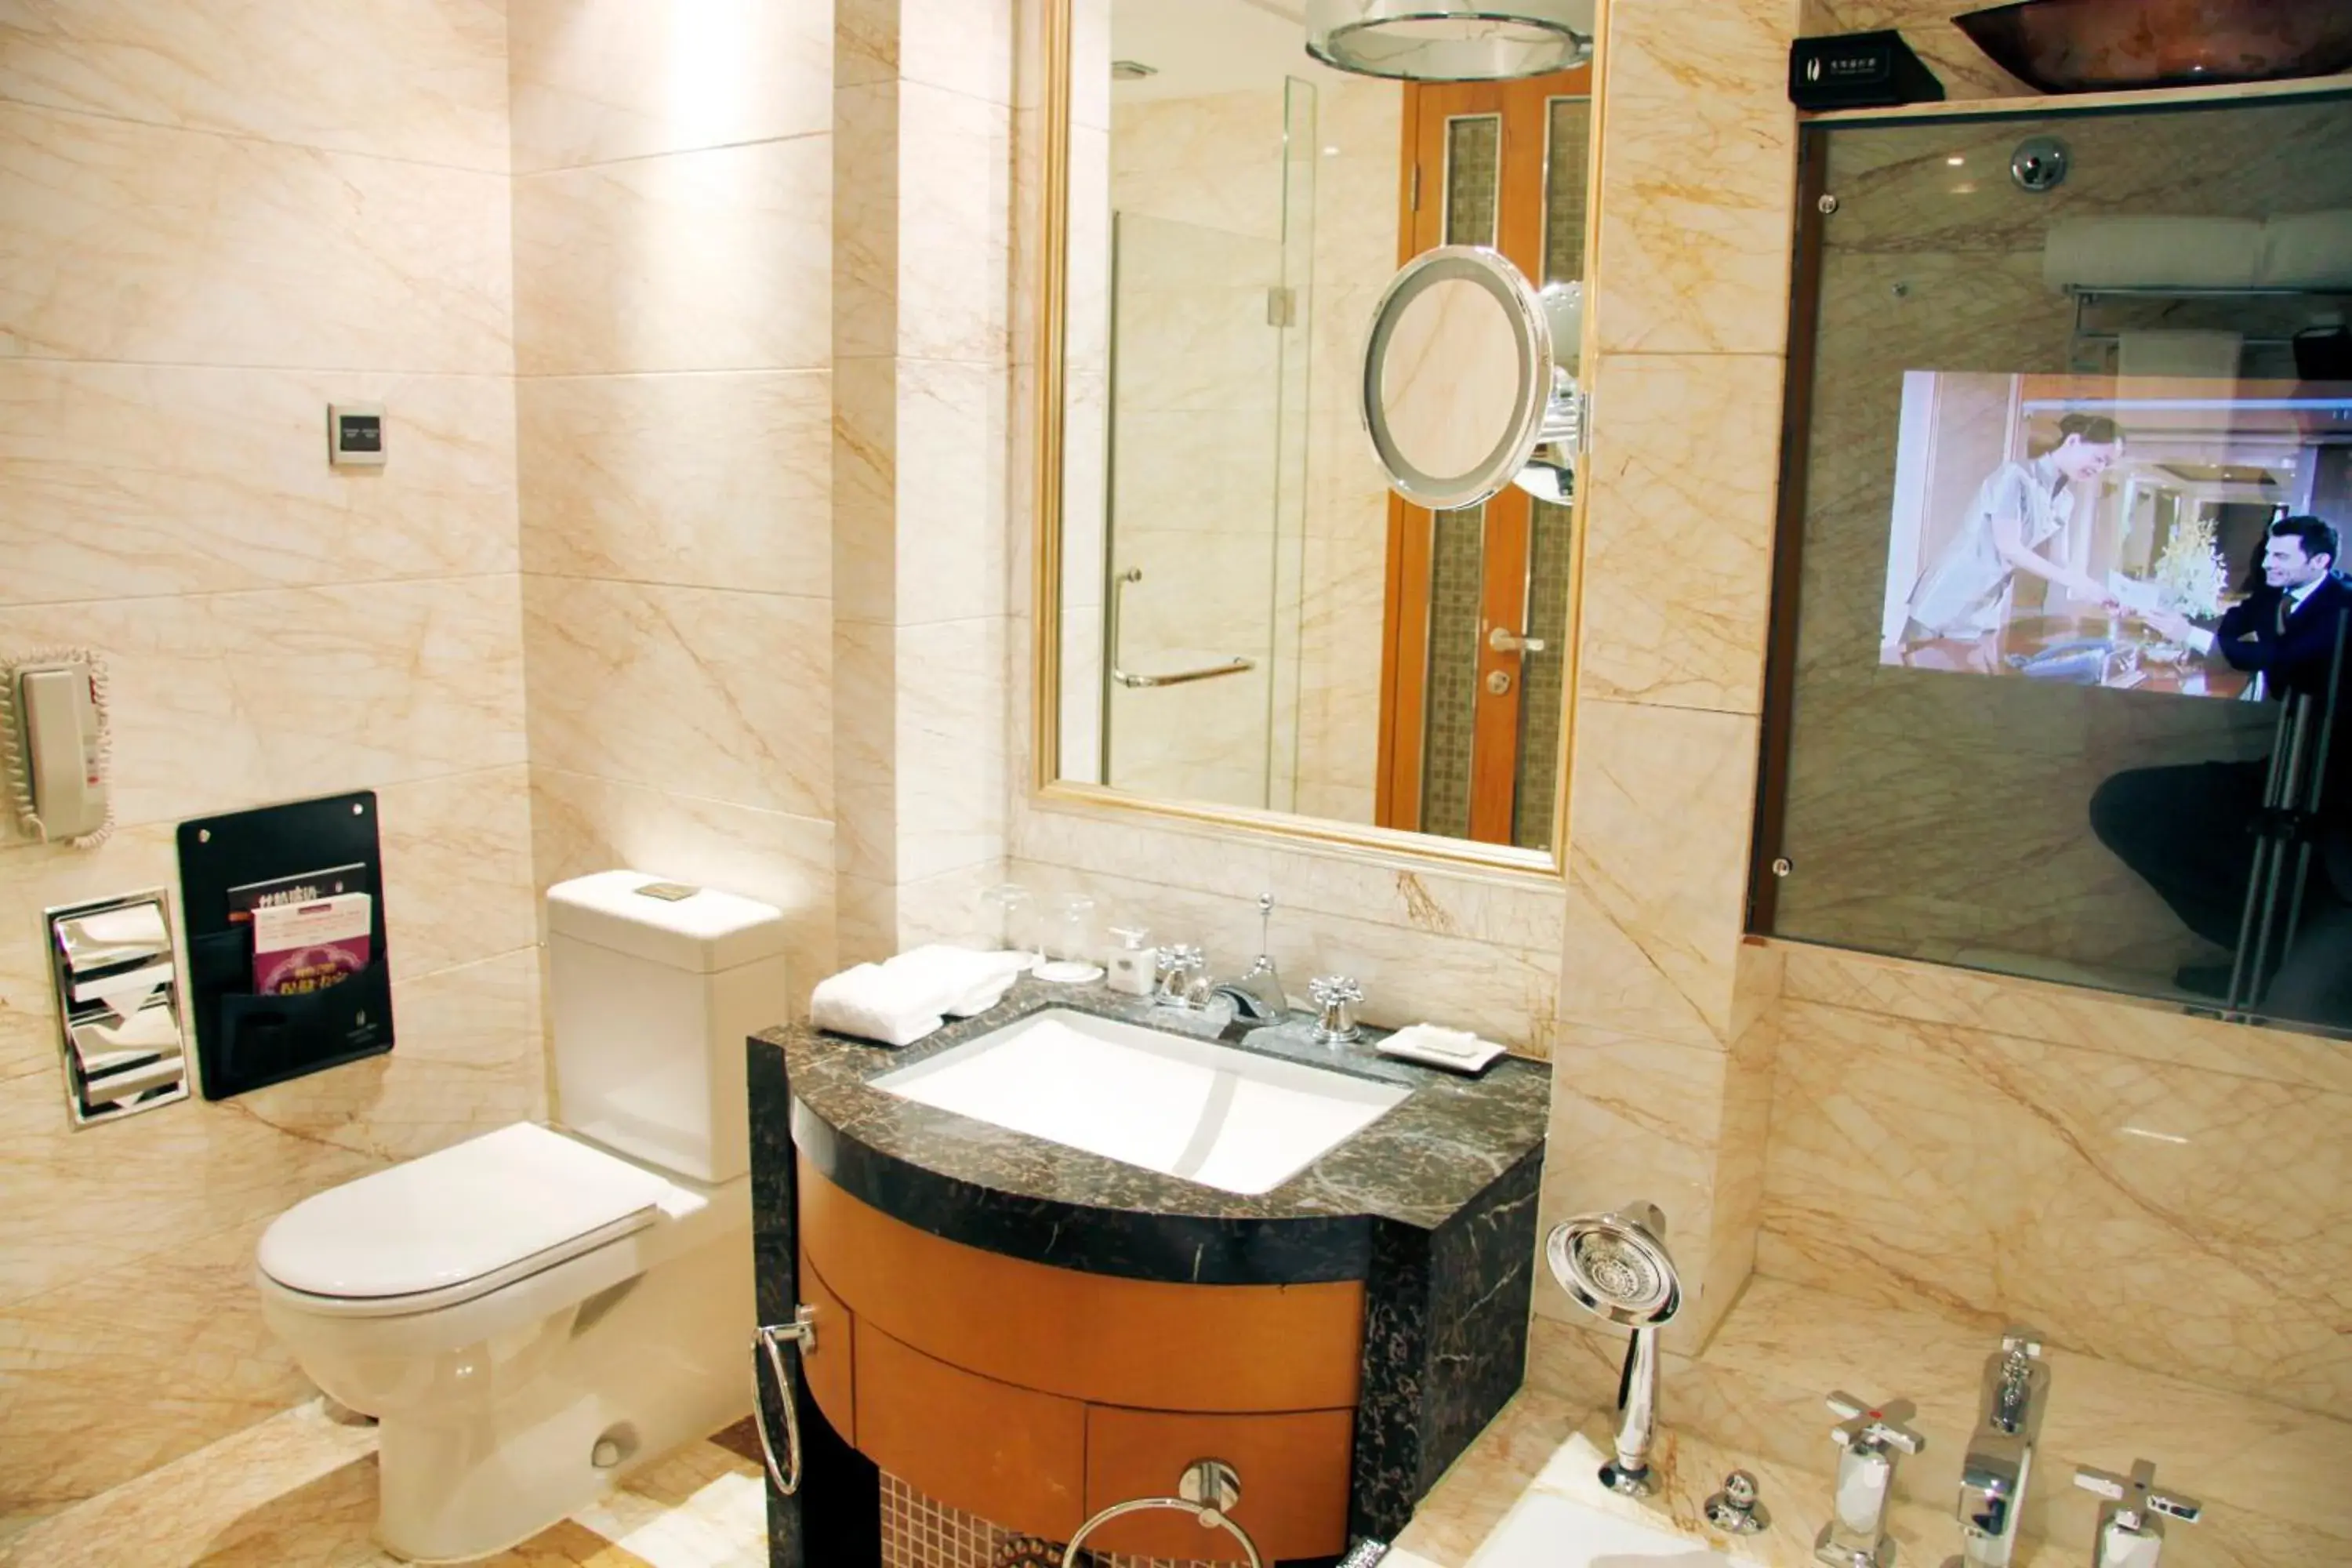 Bathroom in Radegast Hotel CBD Beijing